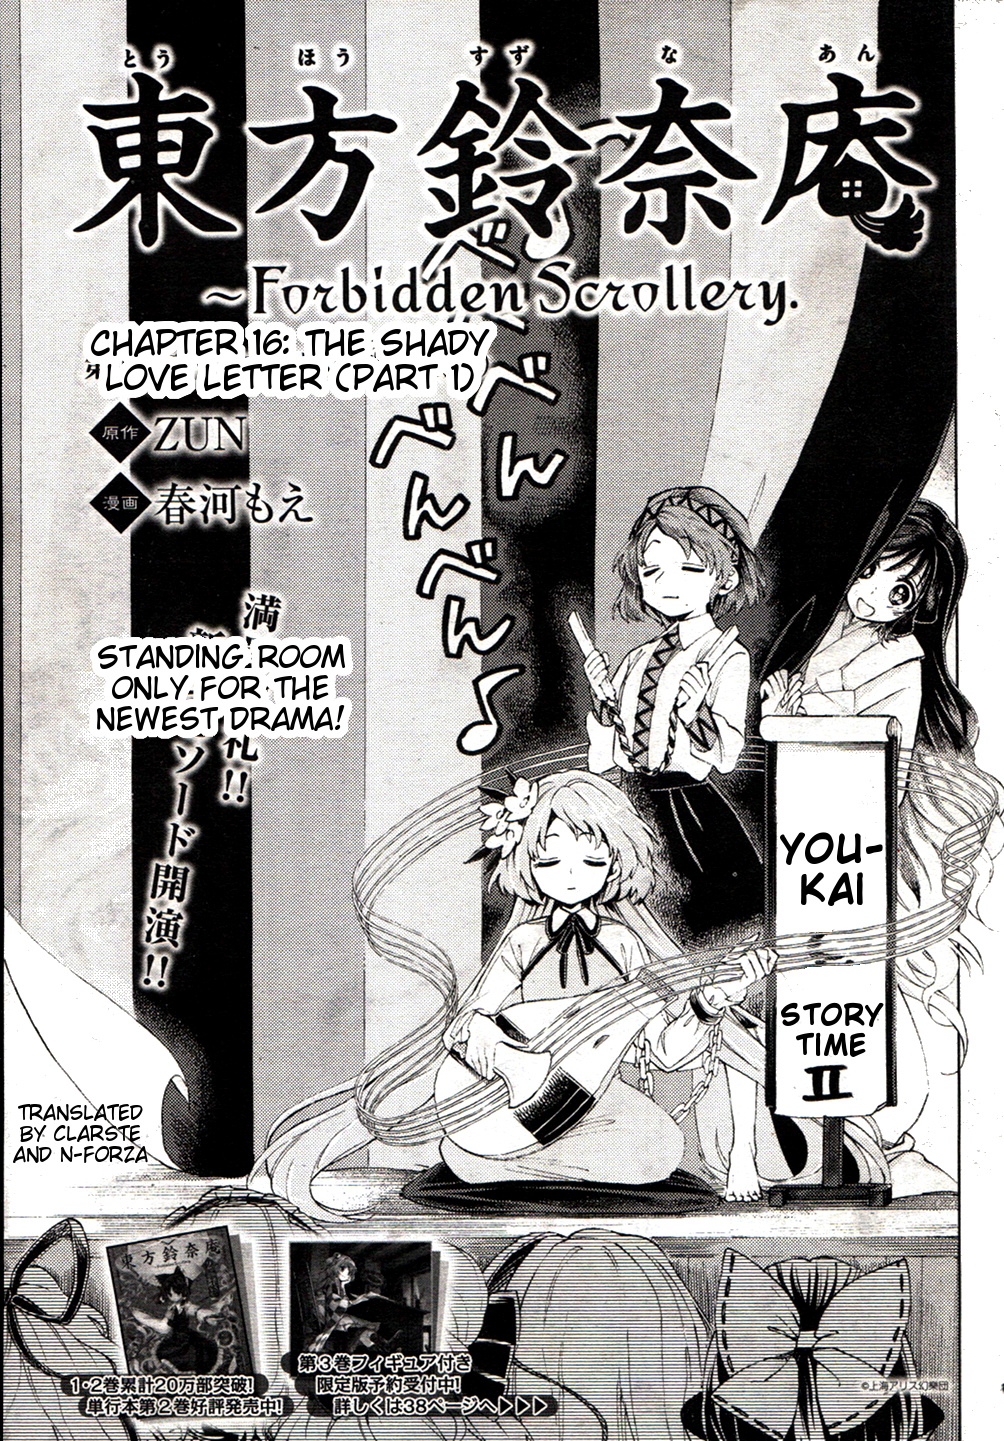 Touhou Suzunaan ~ Forbidden Scrollery Vol.3 Ch.16